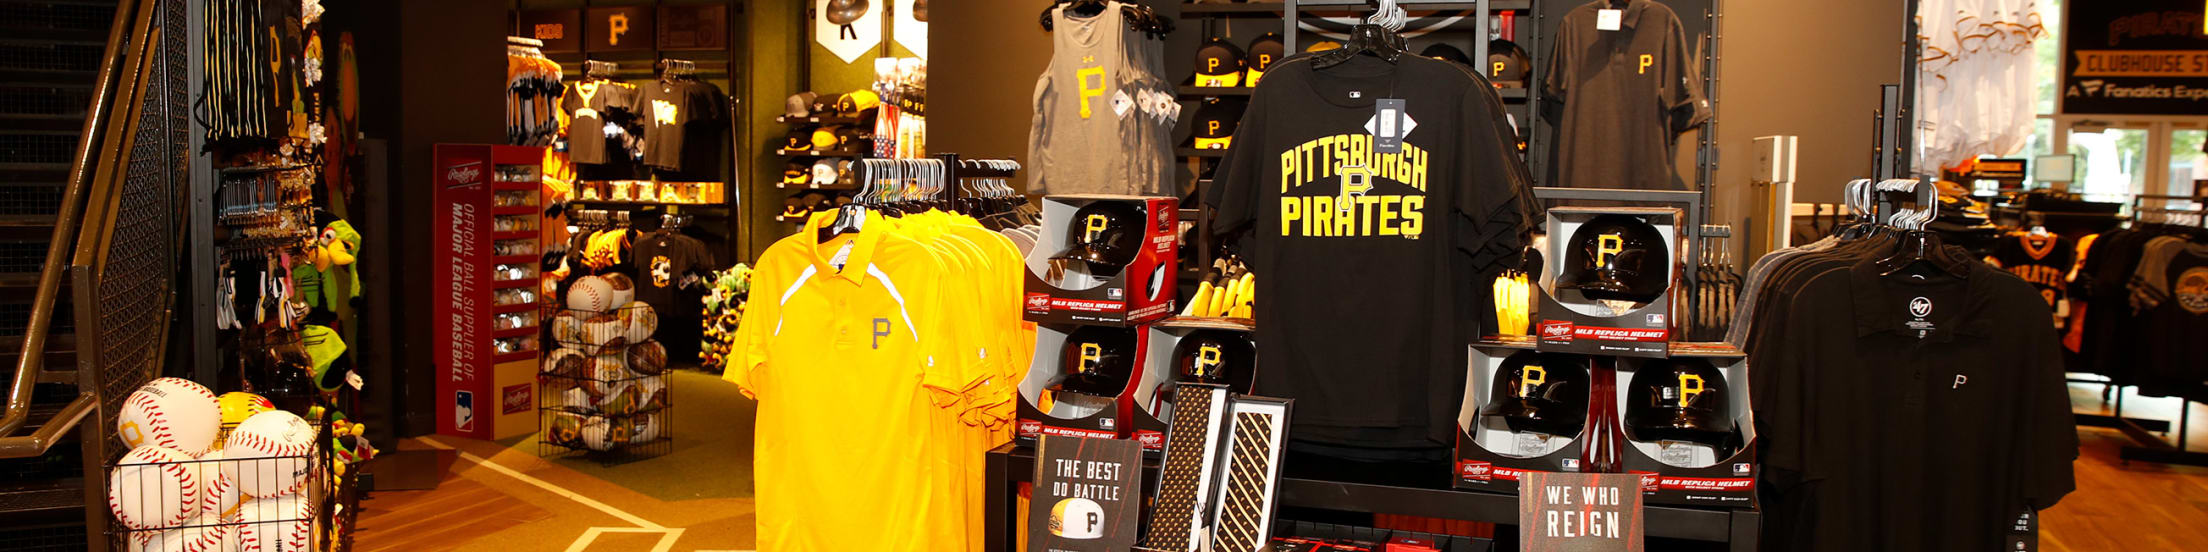 pittsburgh pirates baseball gear